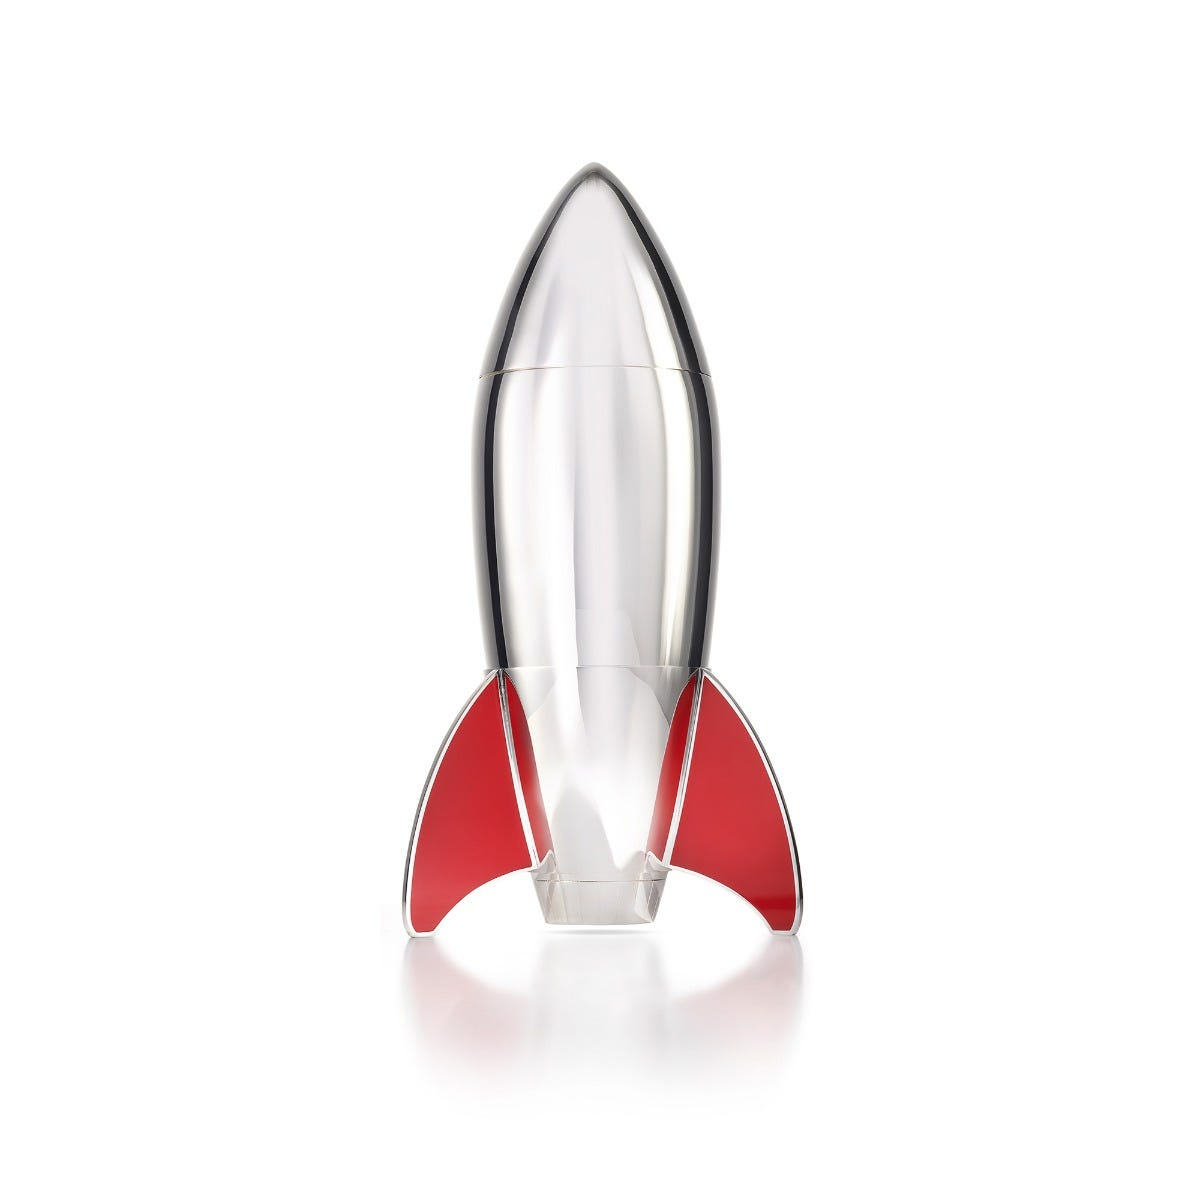 Rocket Cocktail Shaker in Sterling Silver